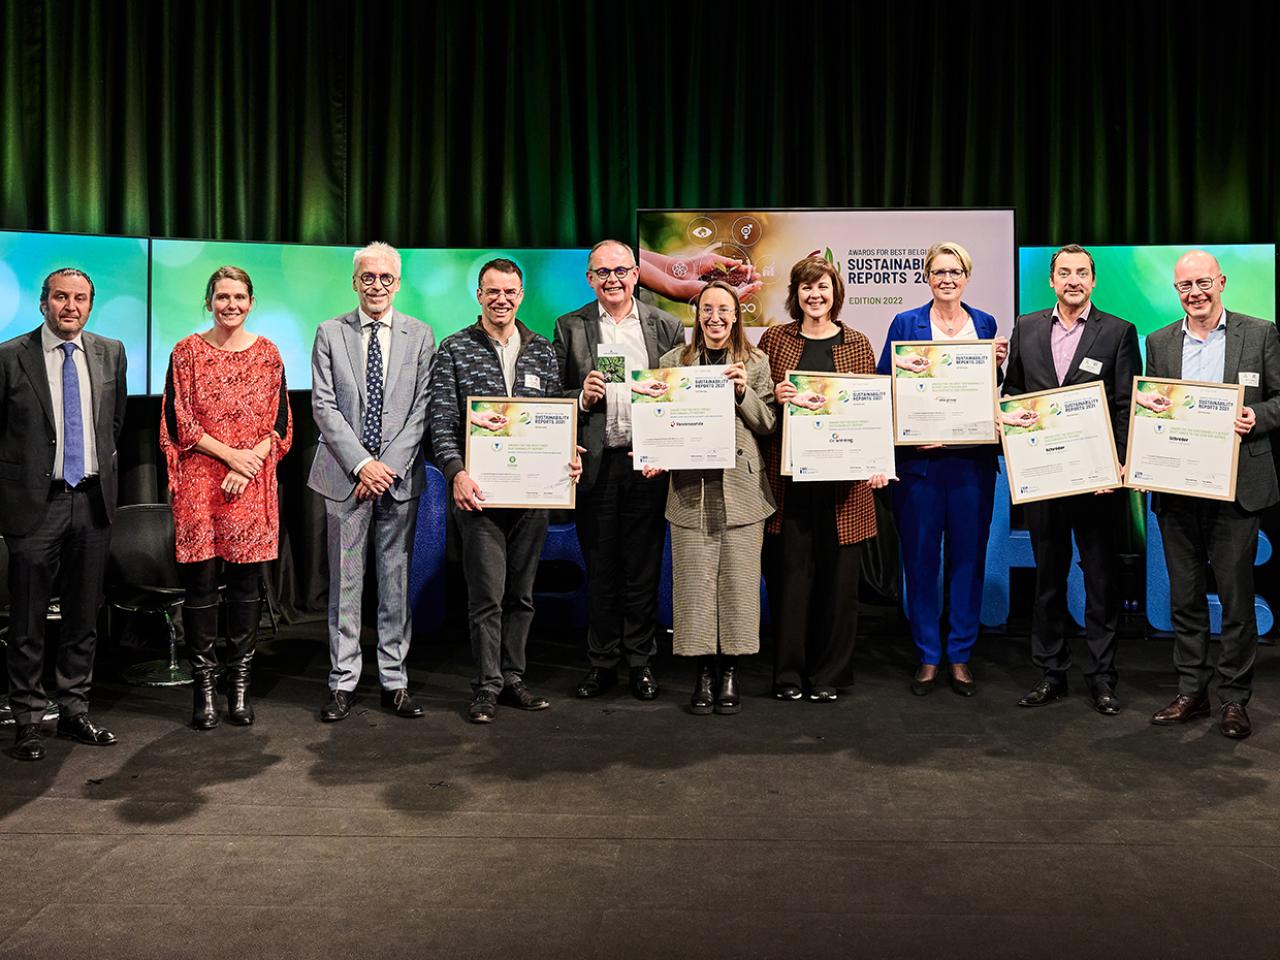 Schréder's first Sustainability Report won 2 prizes